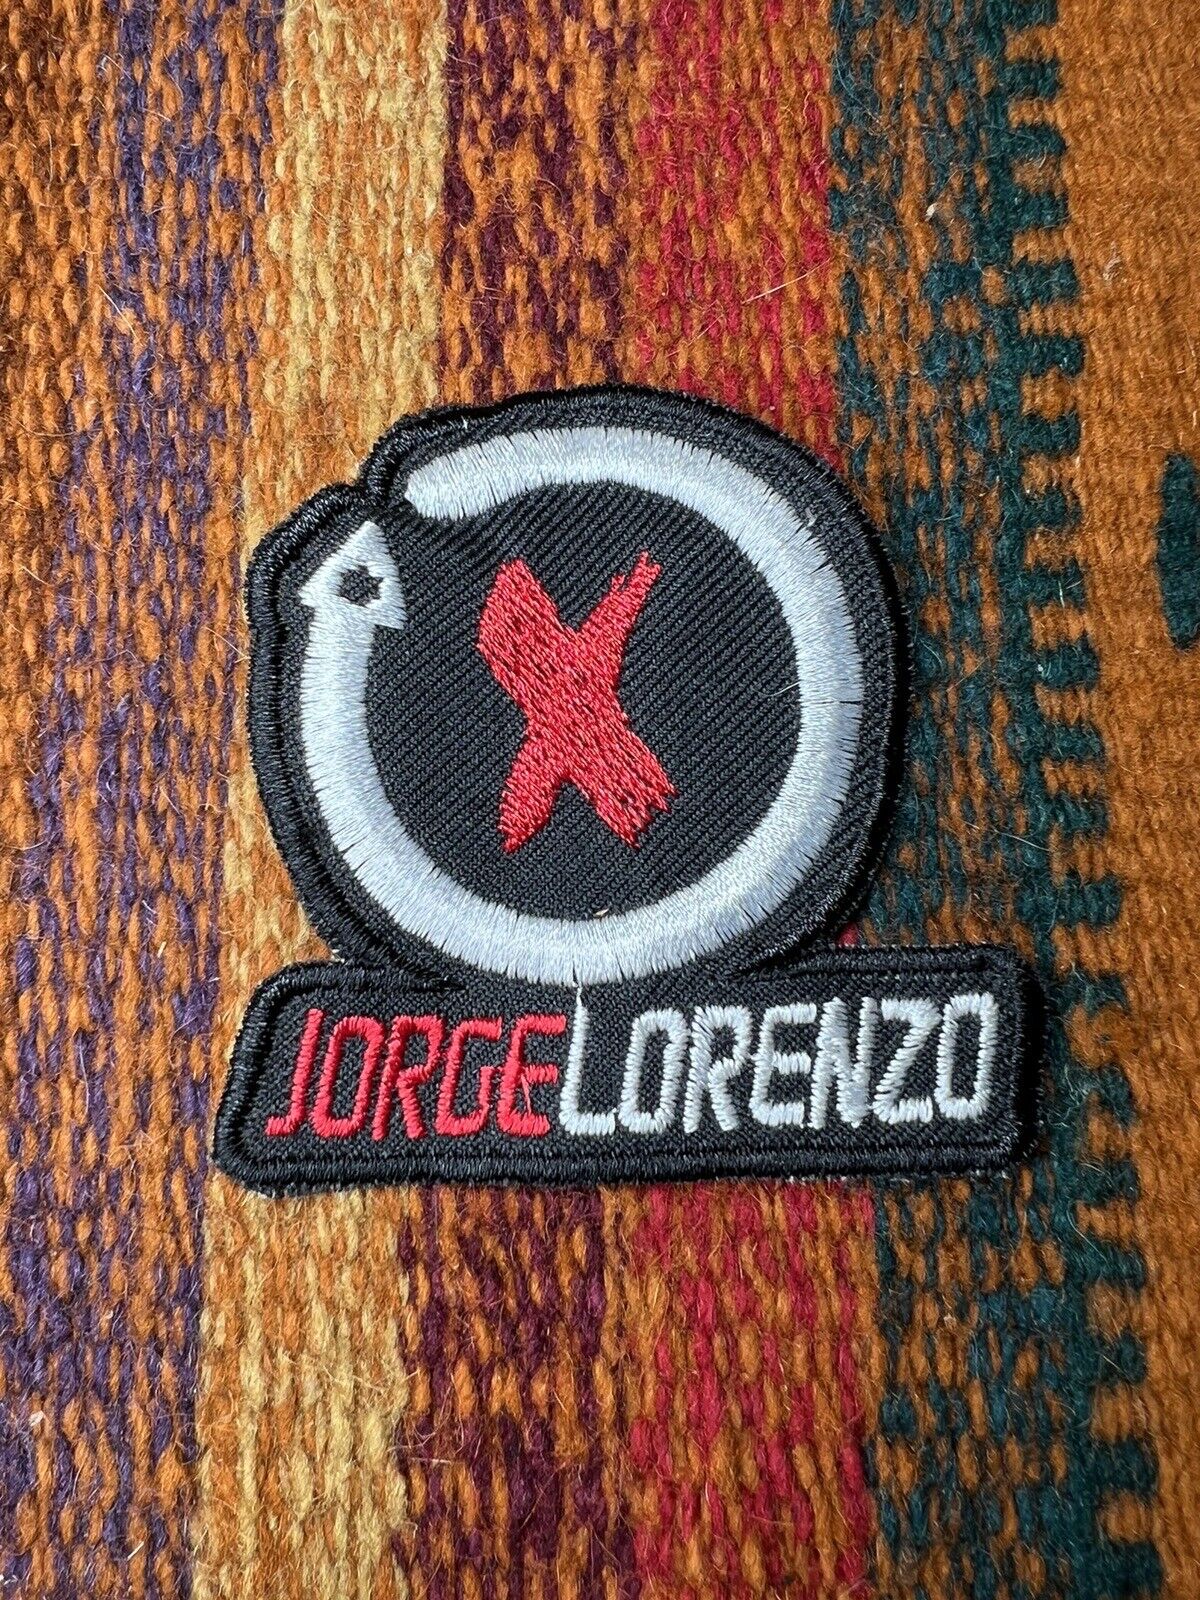 Jorge Lorenzo #99 Motorcycle Grand Prix Racing Logo Patch Sew On